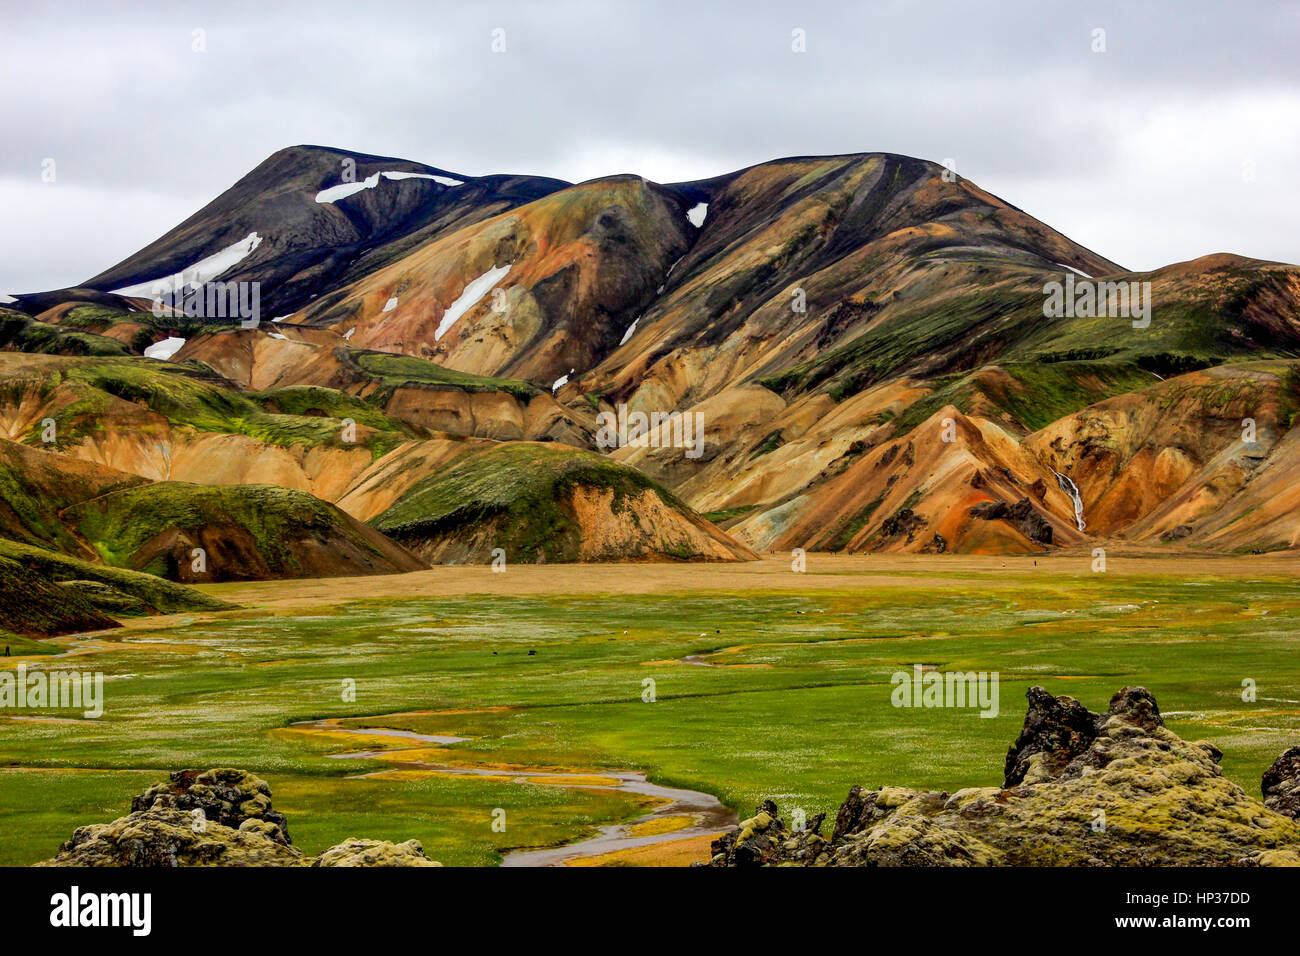 Esotiche montagne vulcaniche e fieid di fiori selvatici in Islanda Foto Stock